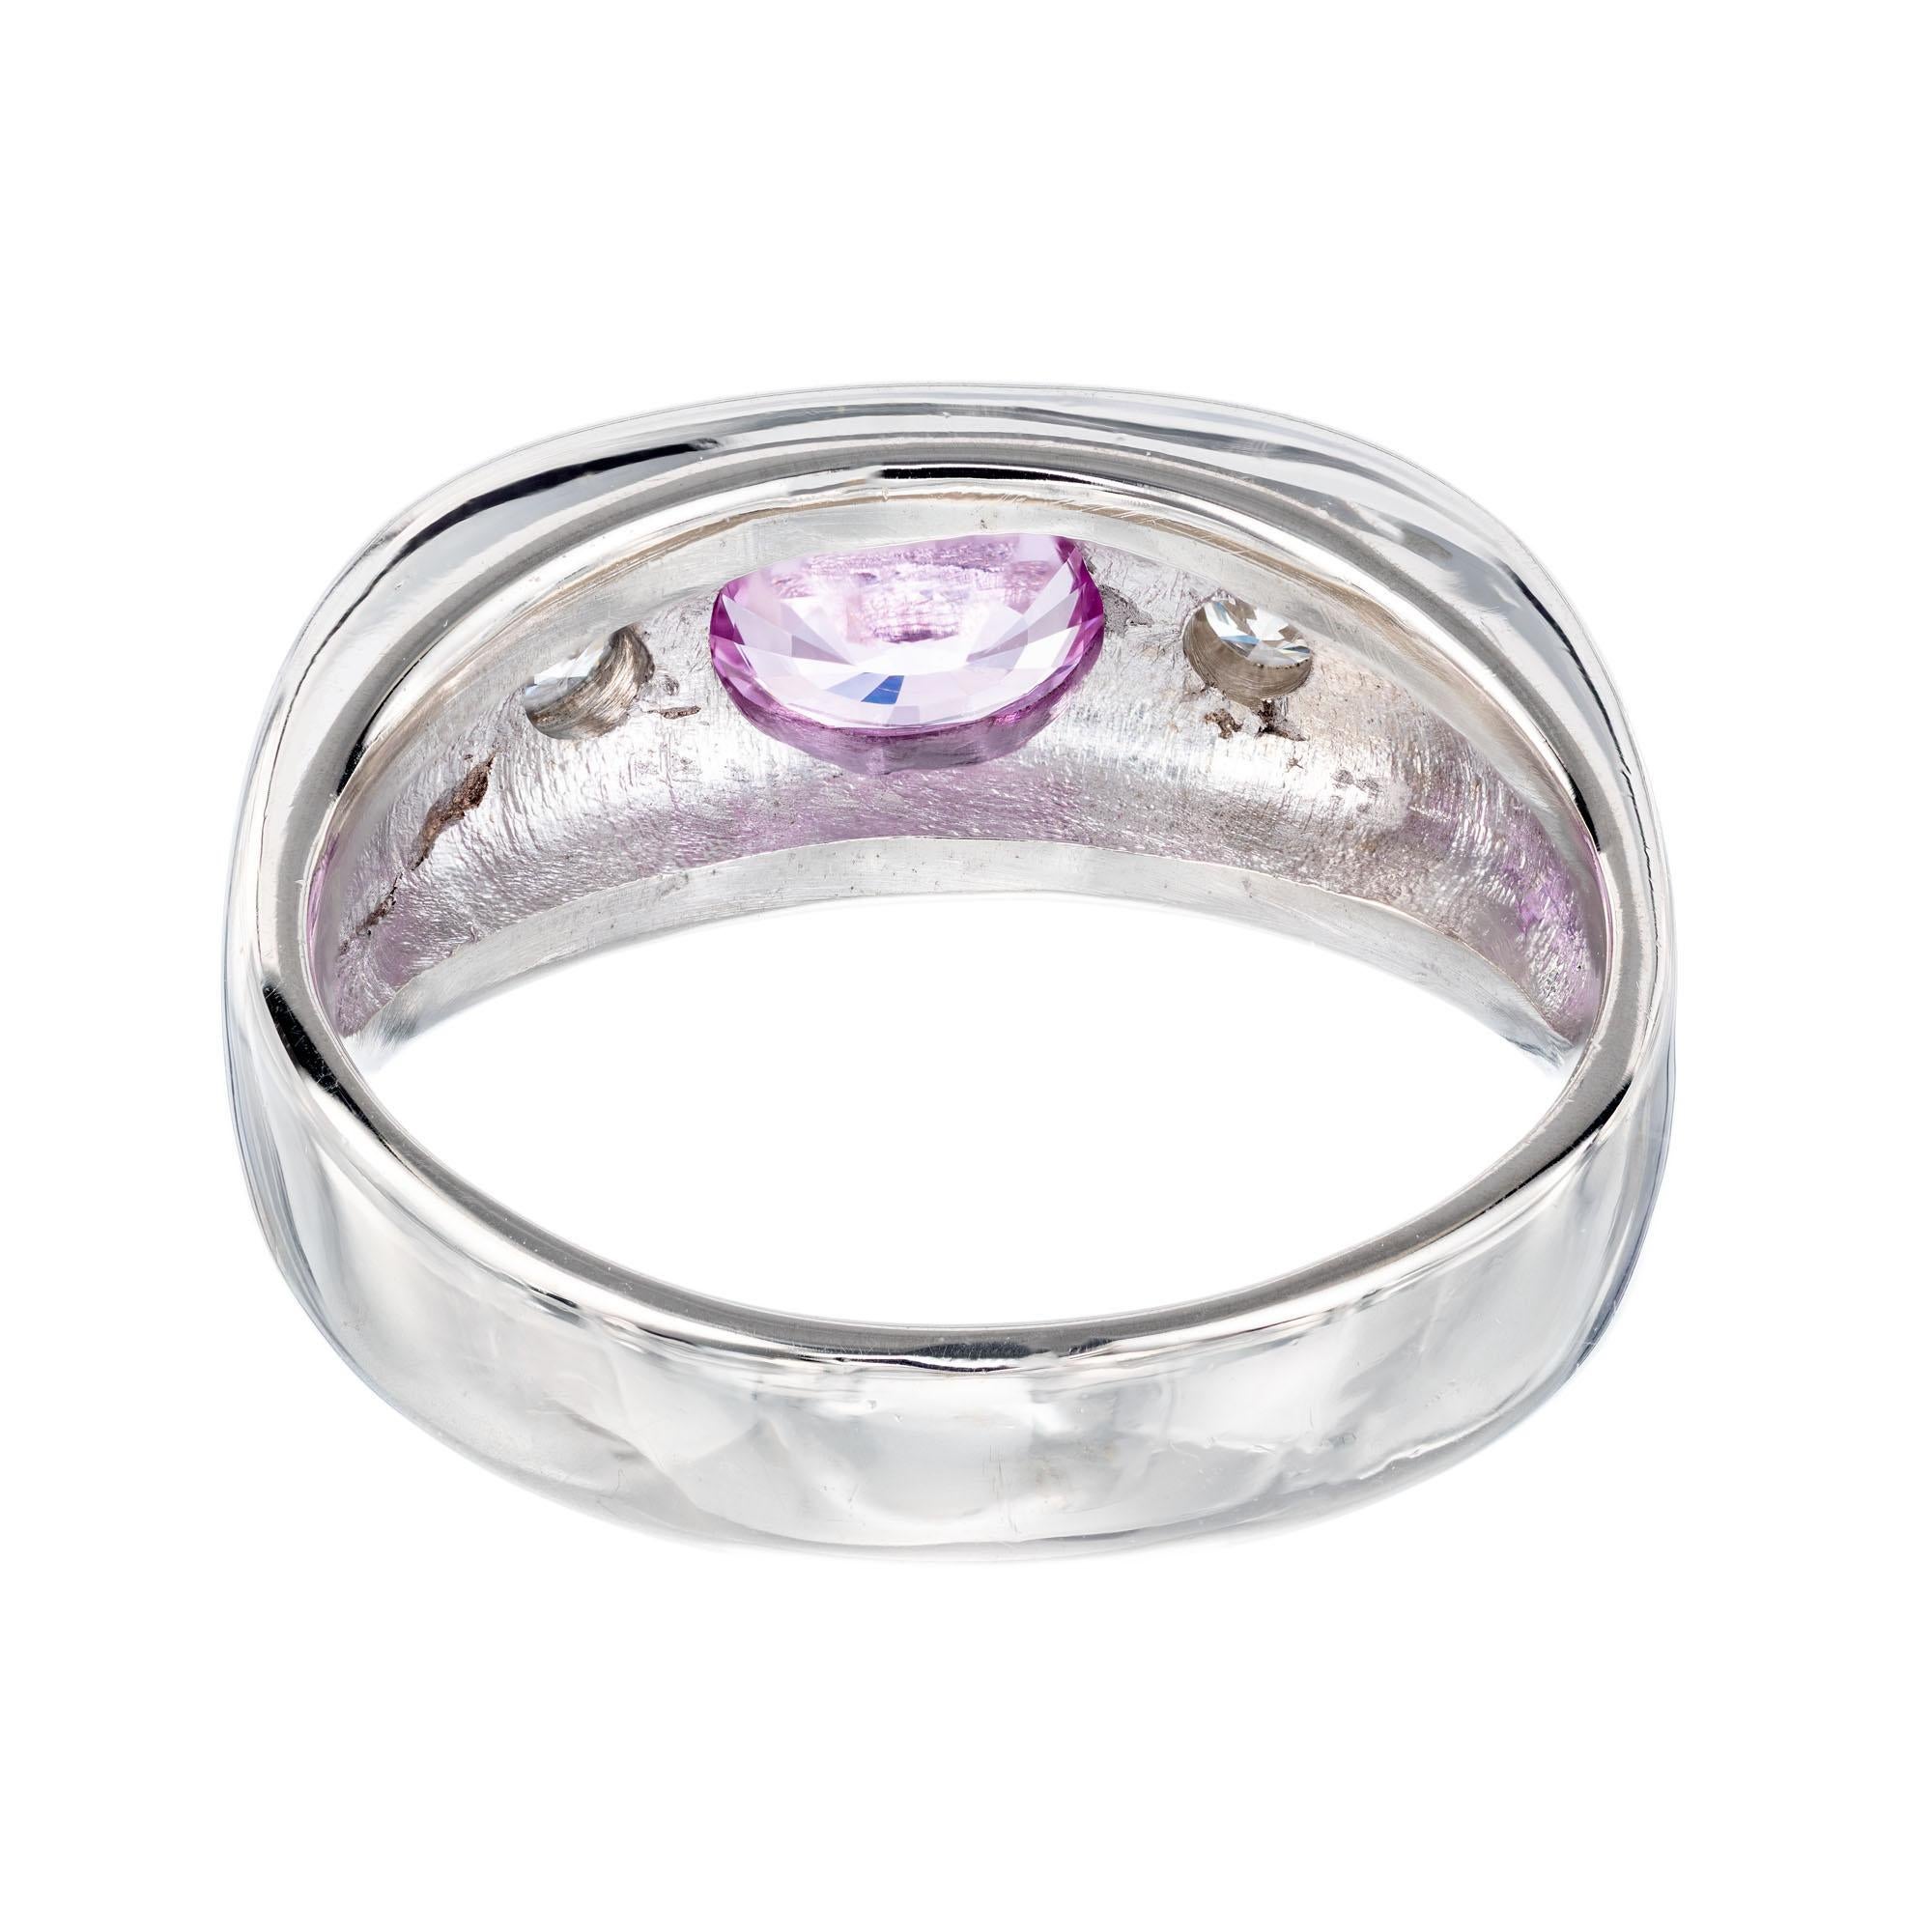 3 carat pink sapphire ring